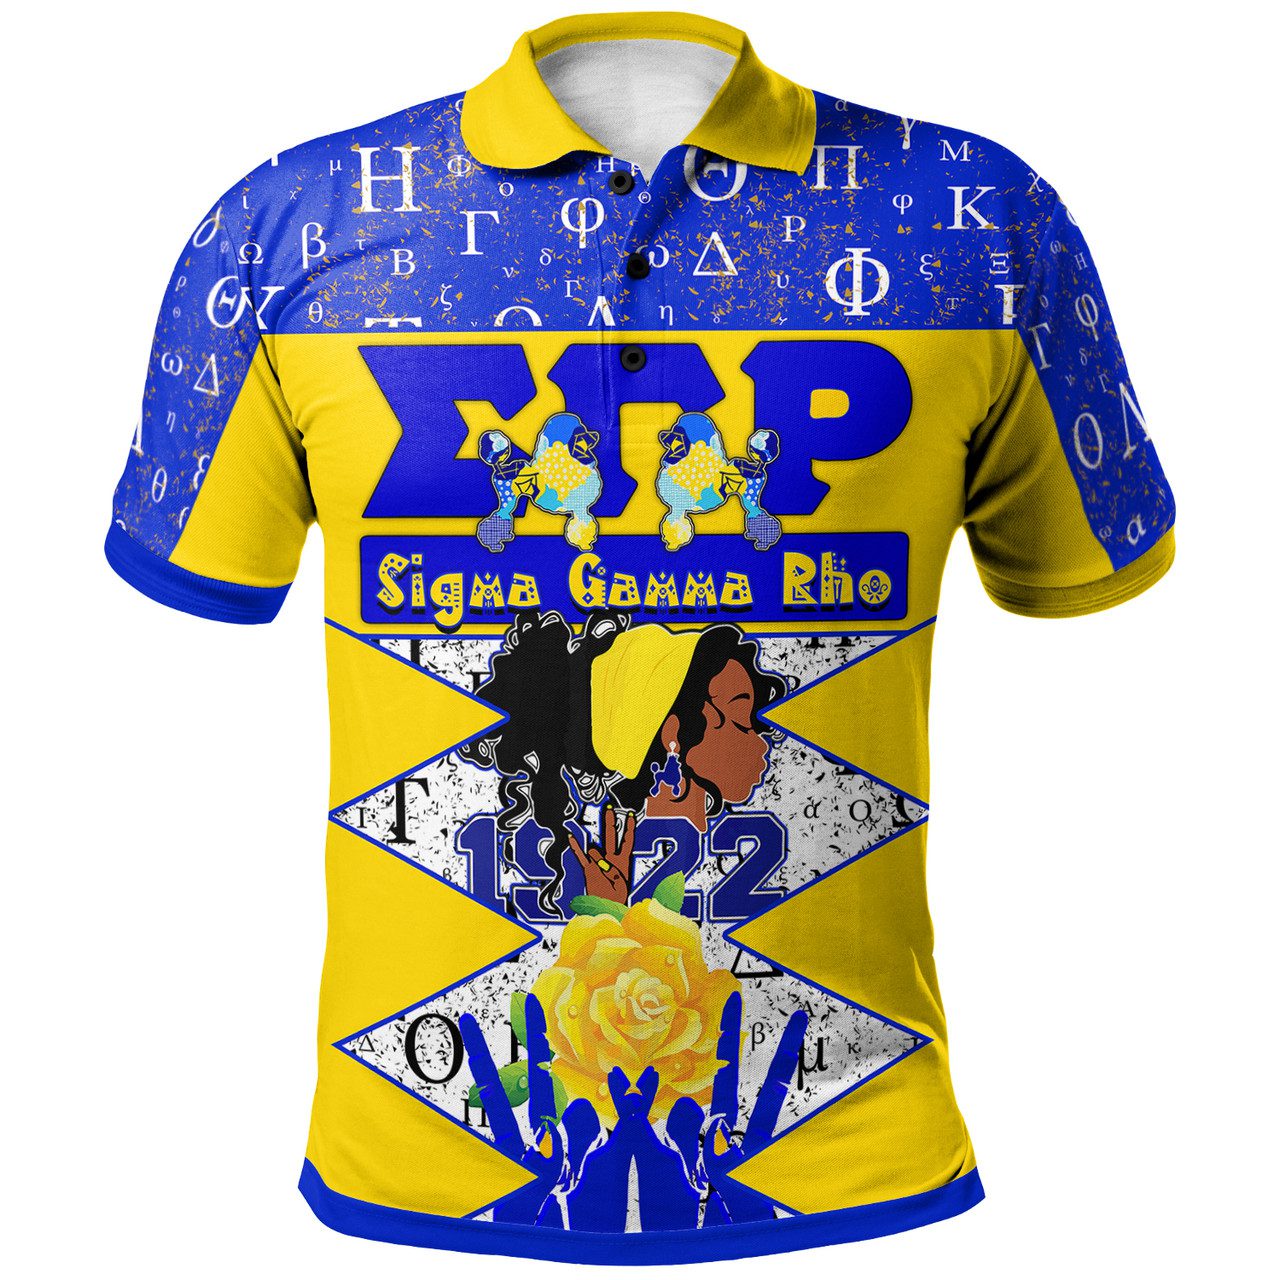 Sigma Gamma Rho Polo Shirt – Sigma Gamma Rho Sorority Girl 1922 Greek Alphabet With Gold Rose And Hand Signs Polo shirt